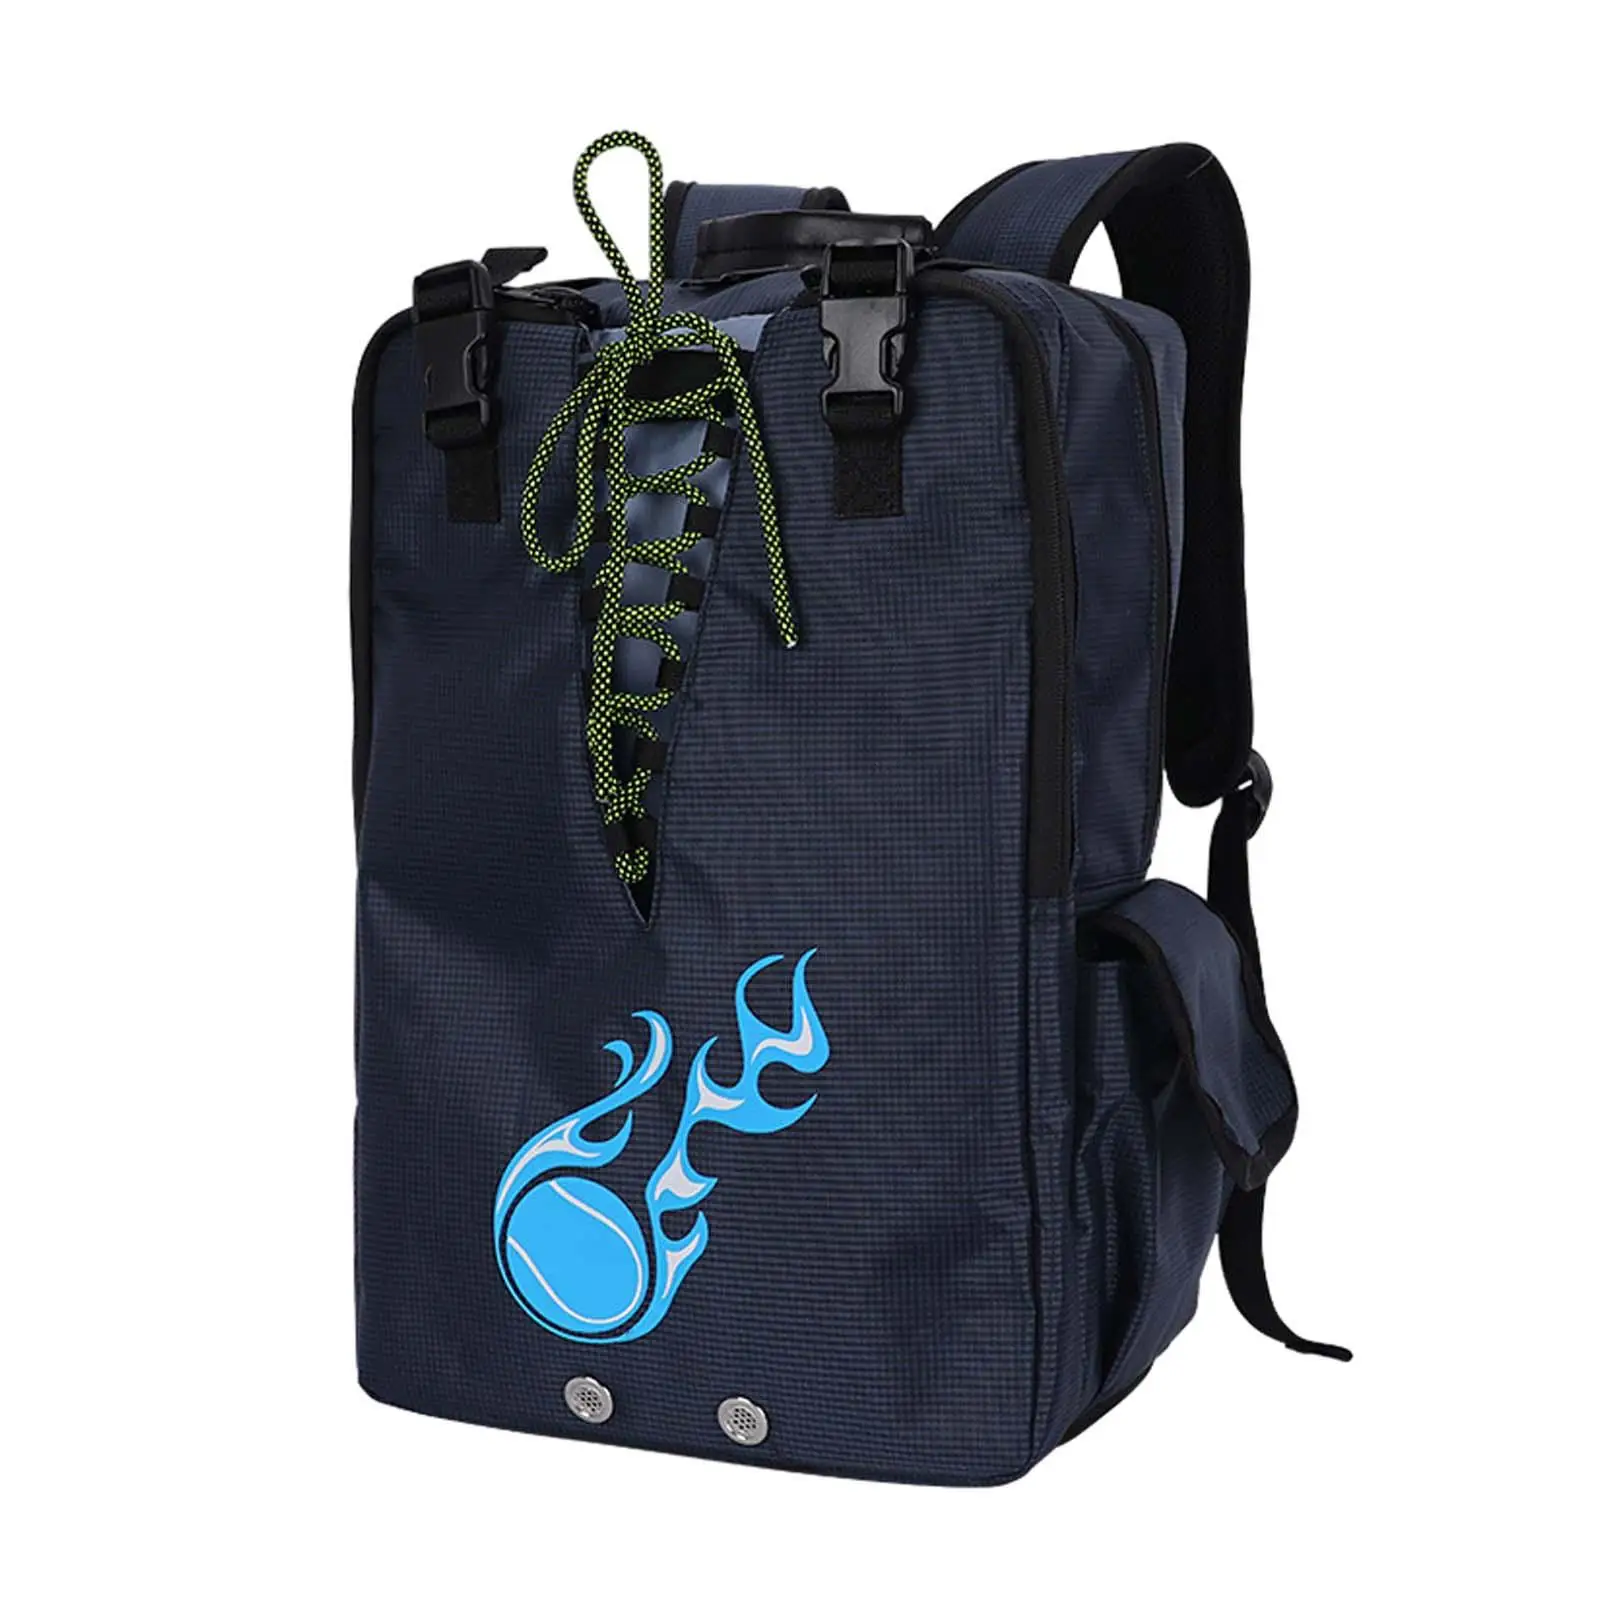 Tennis Bag Breathable Large Sports Backpack for Squash Pickleball Badminton